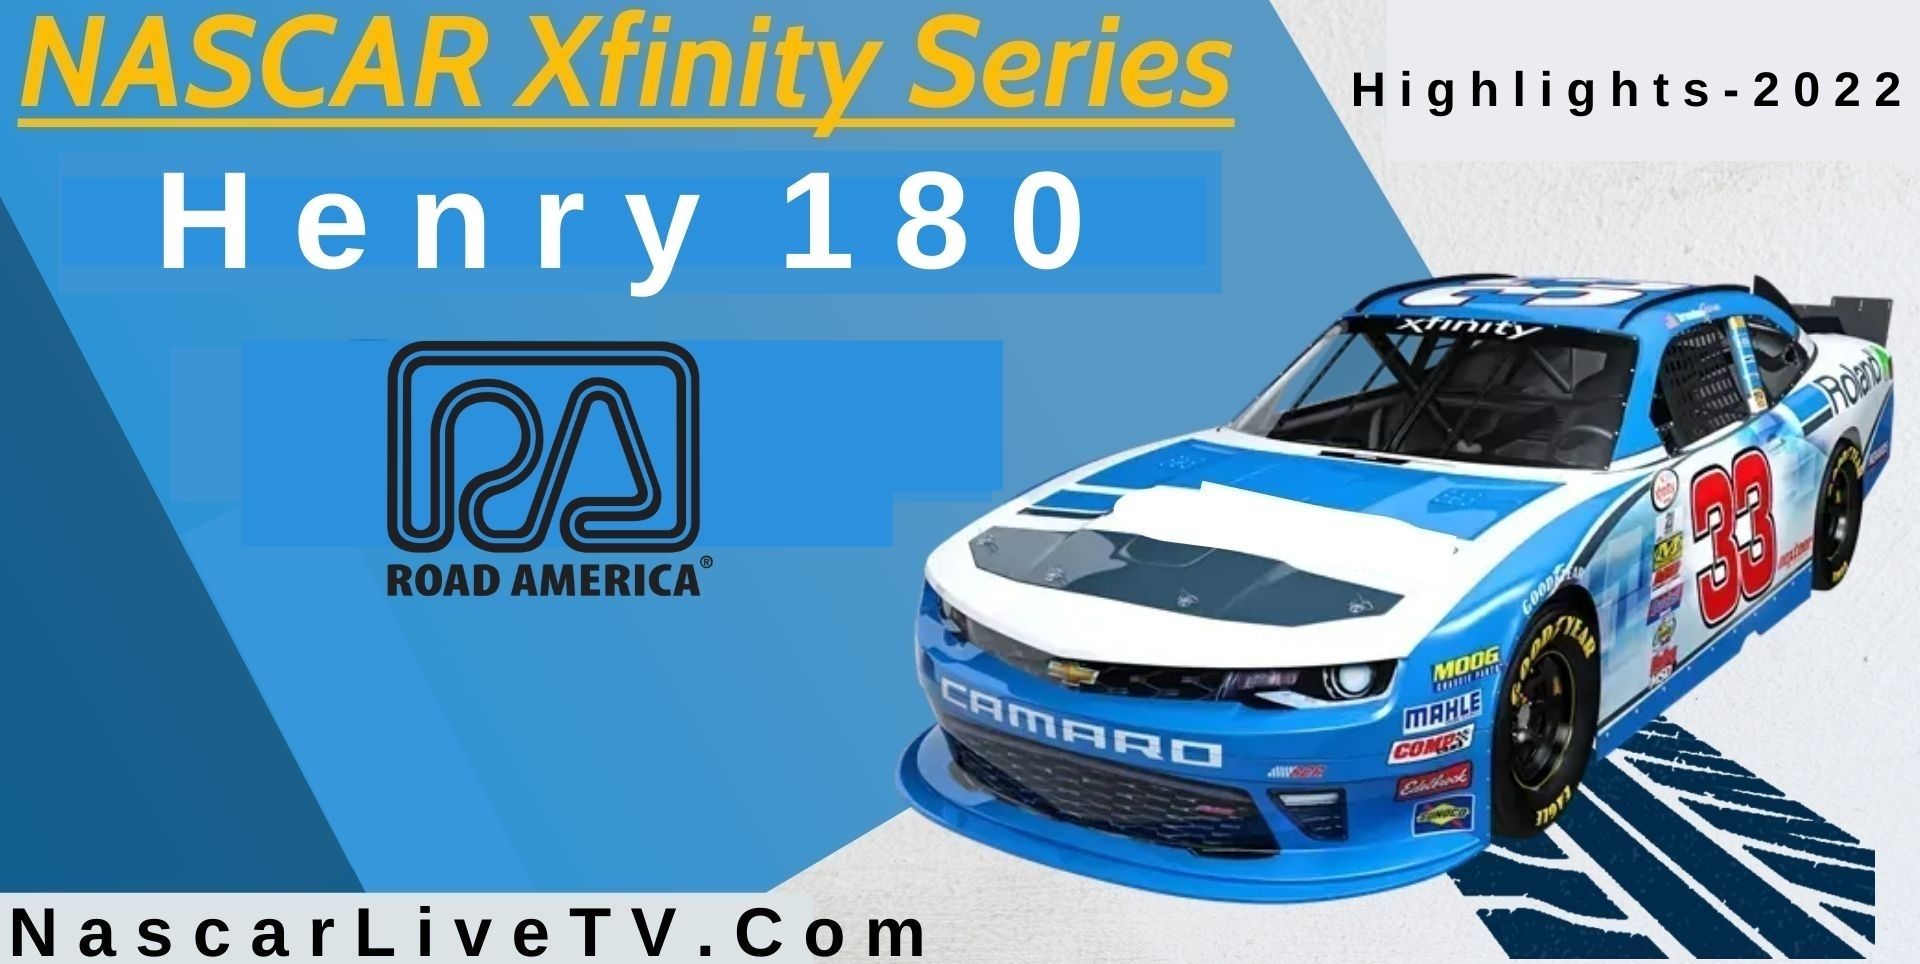 Henry 180 Highlights NASCAR Xfinity Series 2022